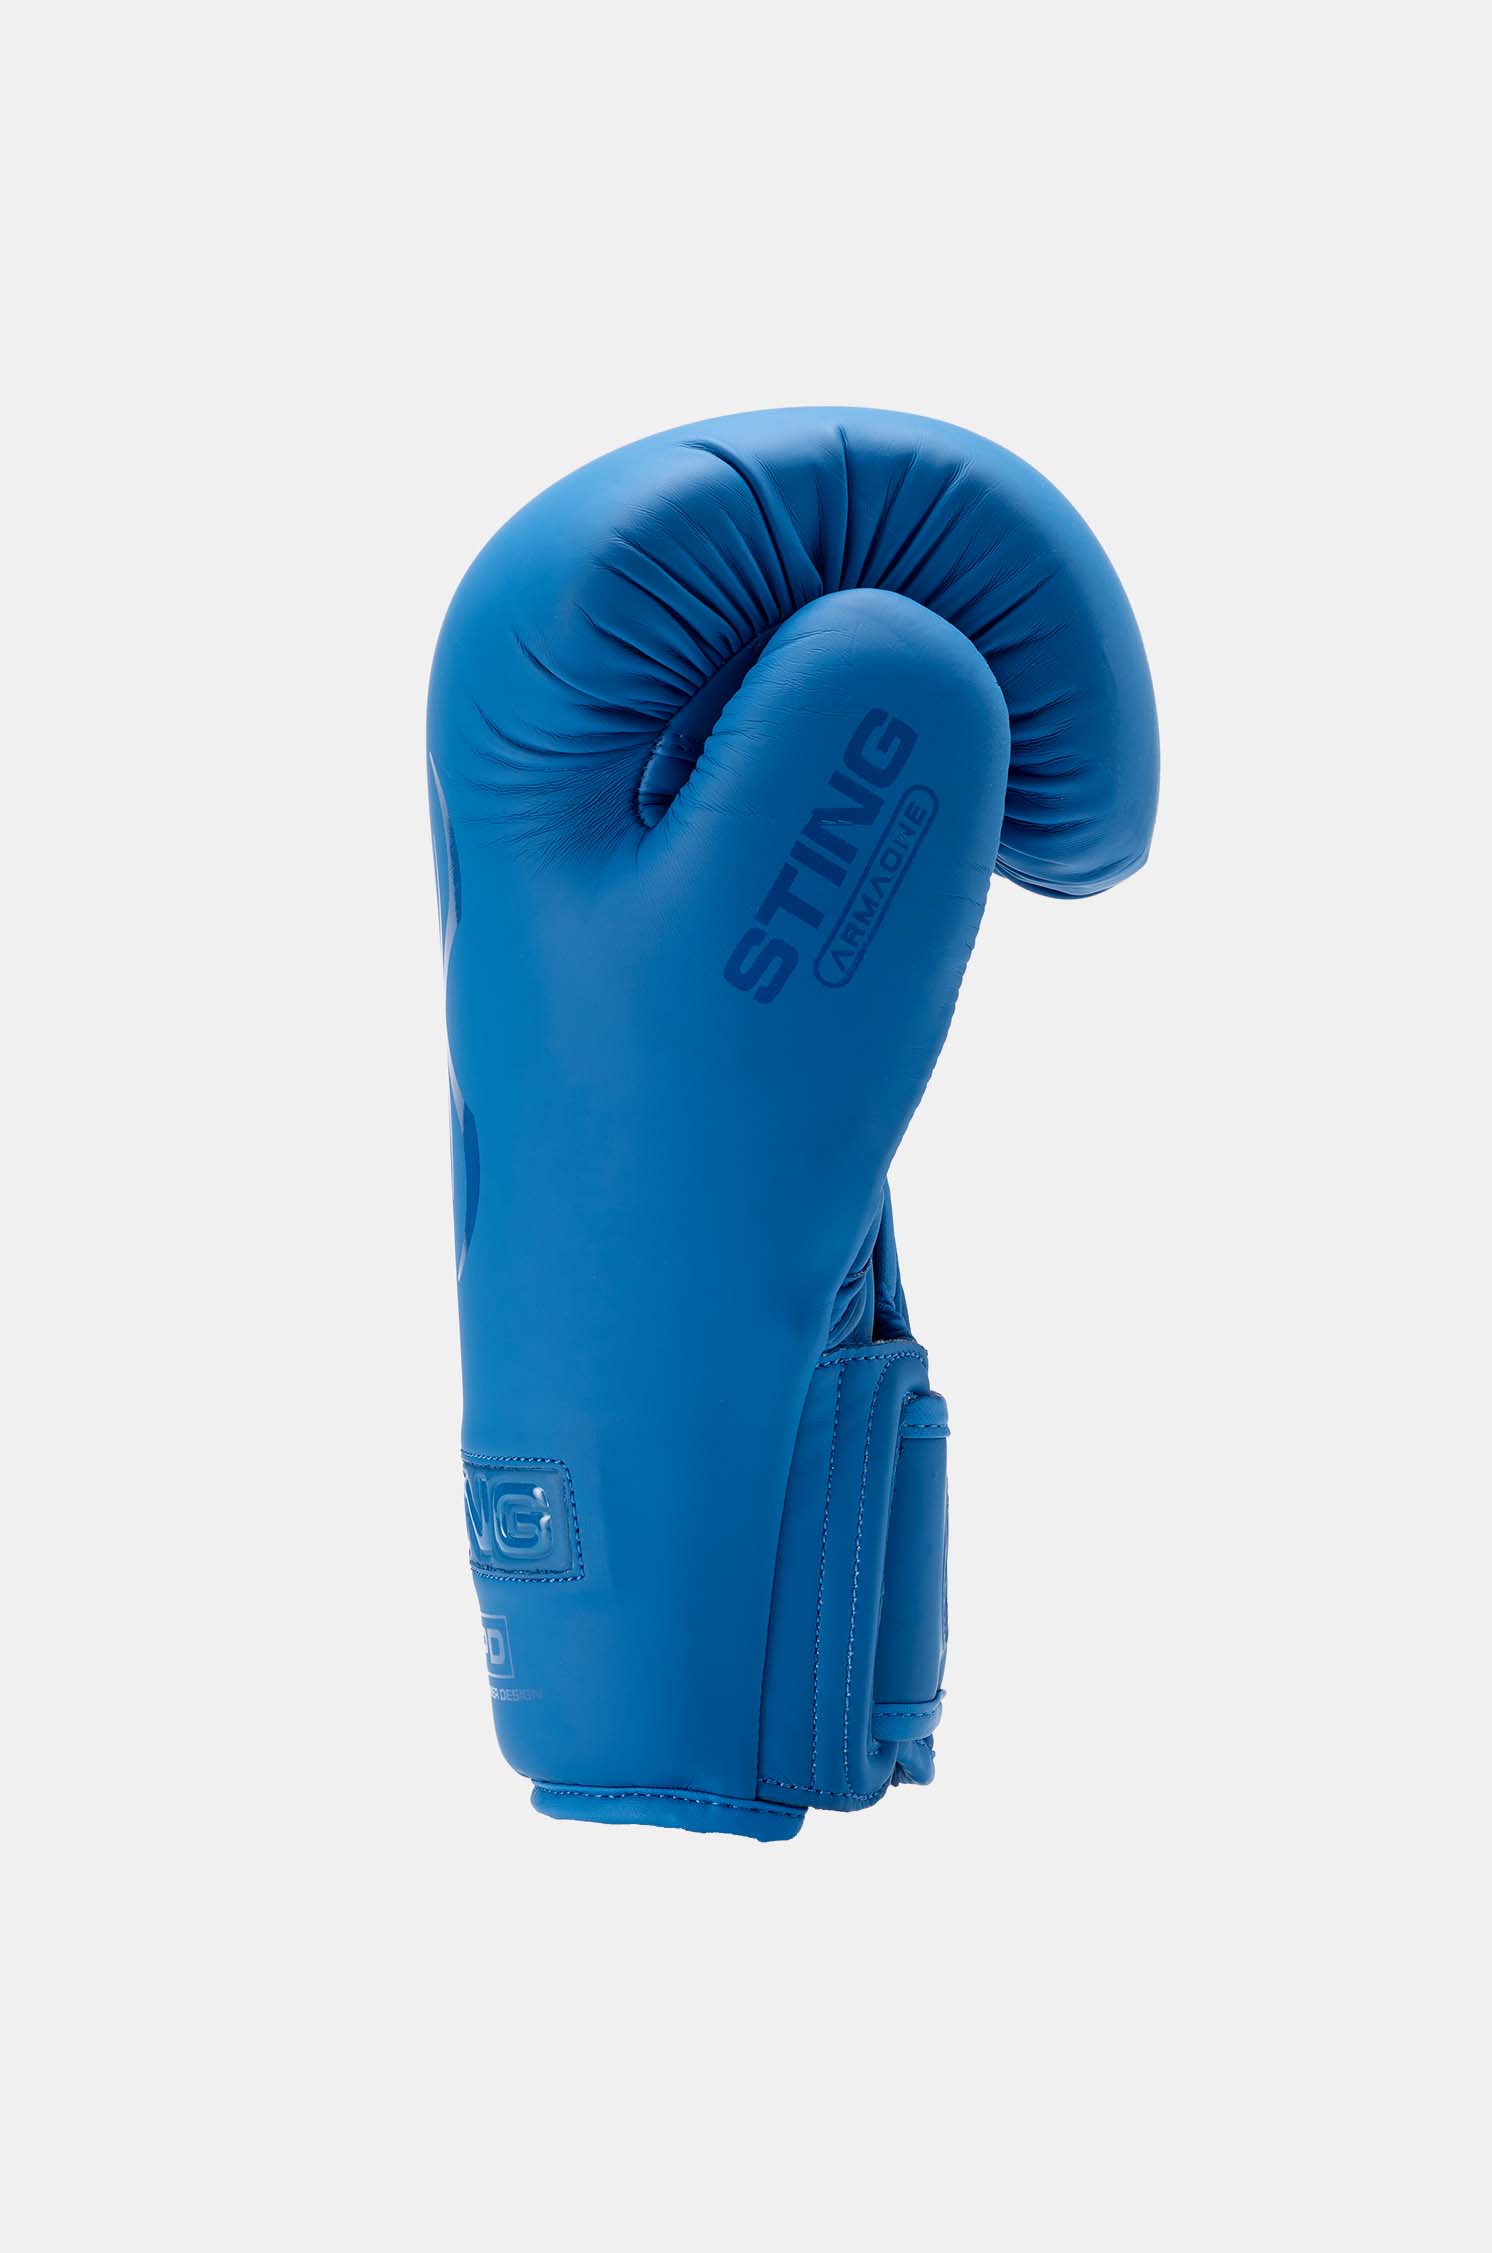 STING Armaone Boxing Glove Blue